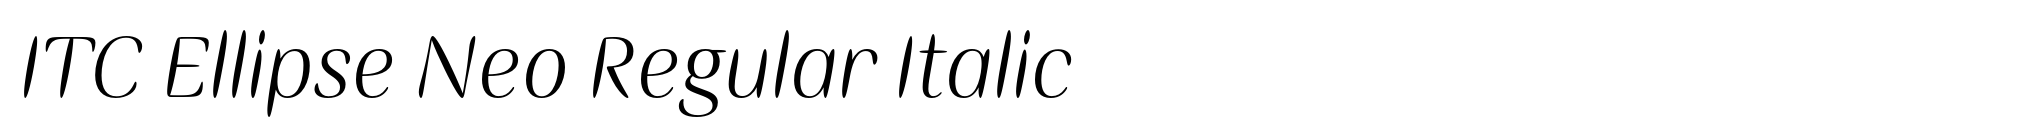 ITC Ellipse Neo Regular Italic image